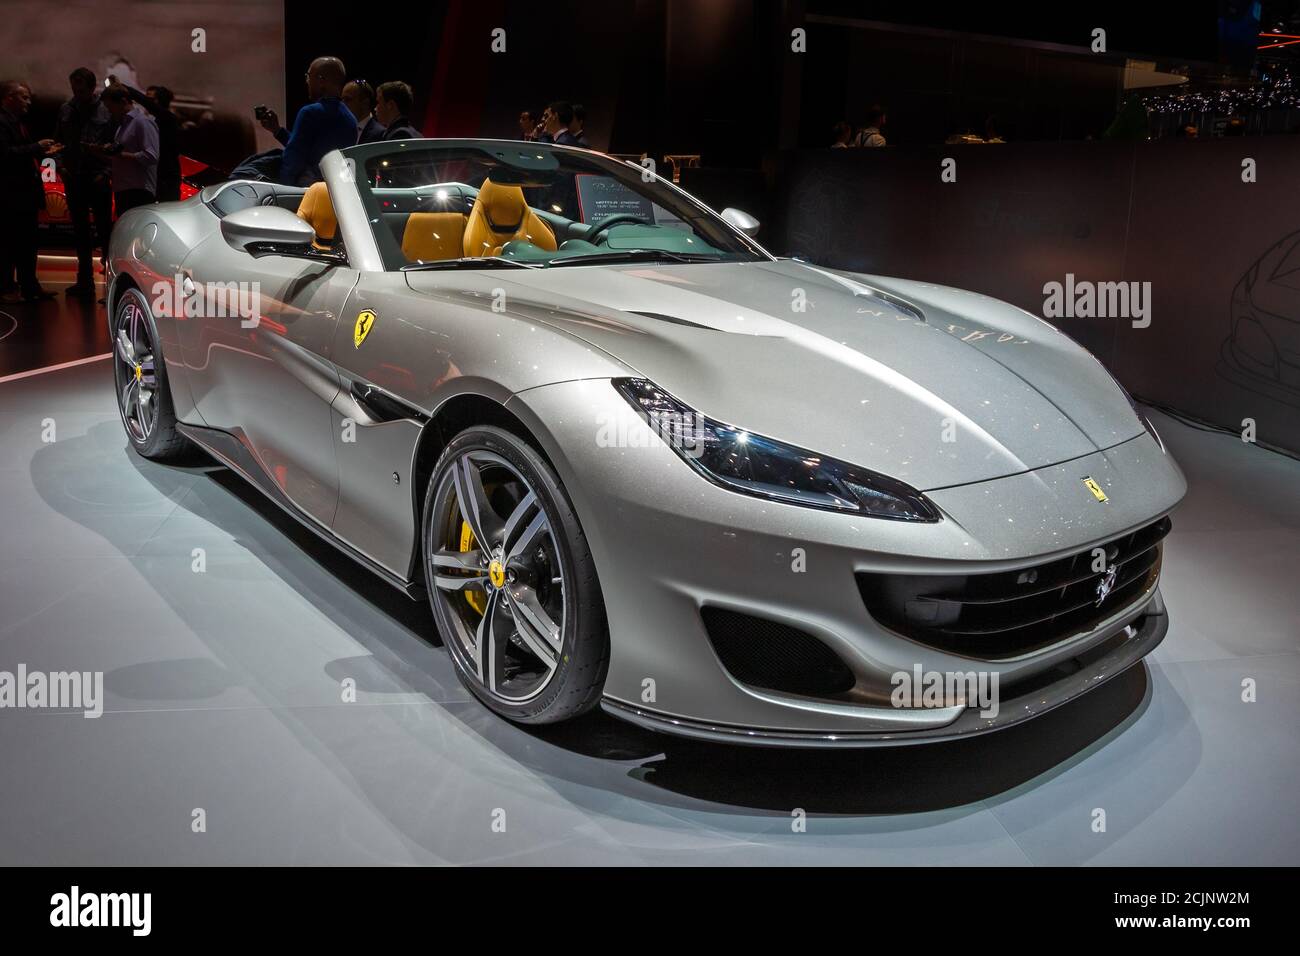 Ferrari Portofino sports car at the 89th Geneva International Motor Show. Geneva, Switzerland - March 5, 2019. Stock Photo